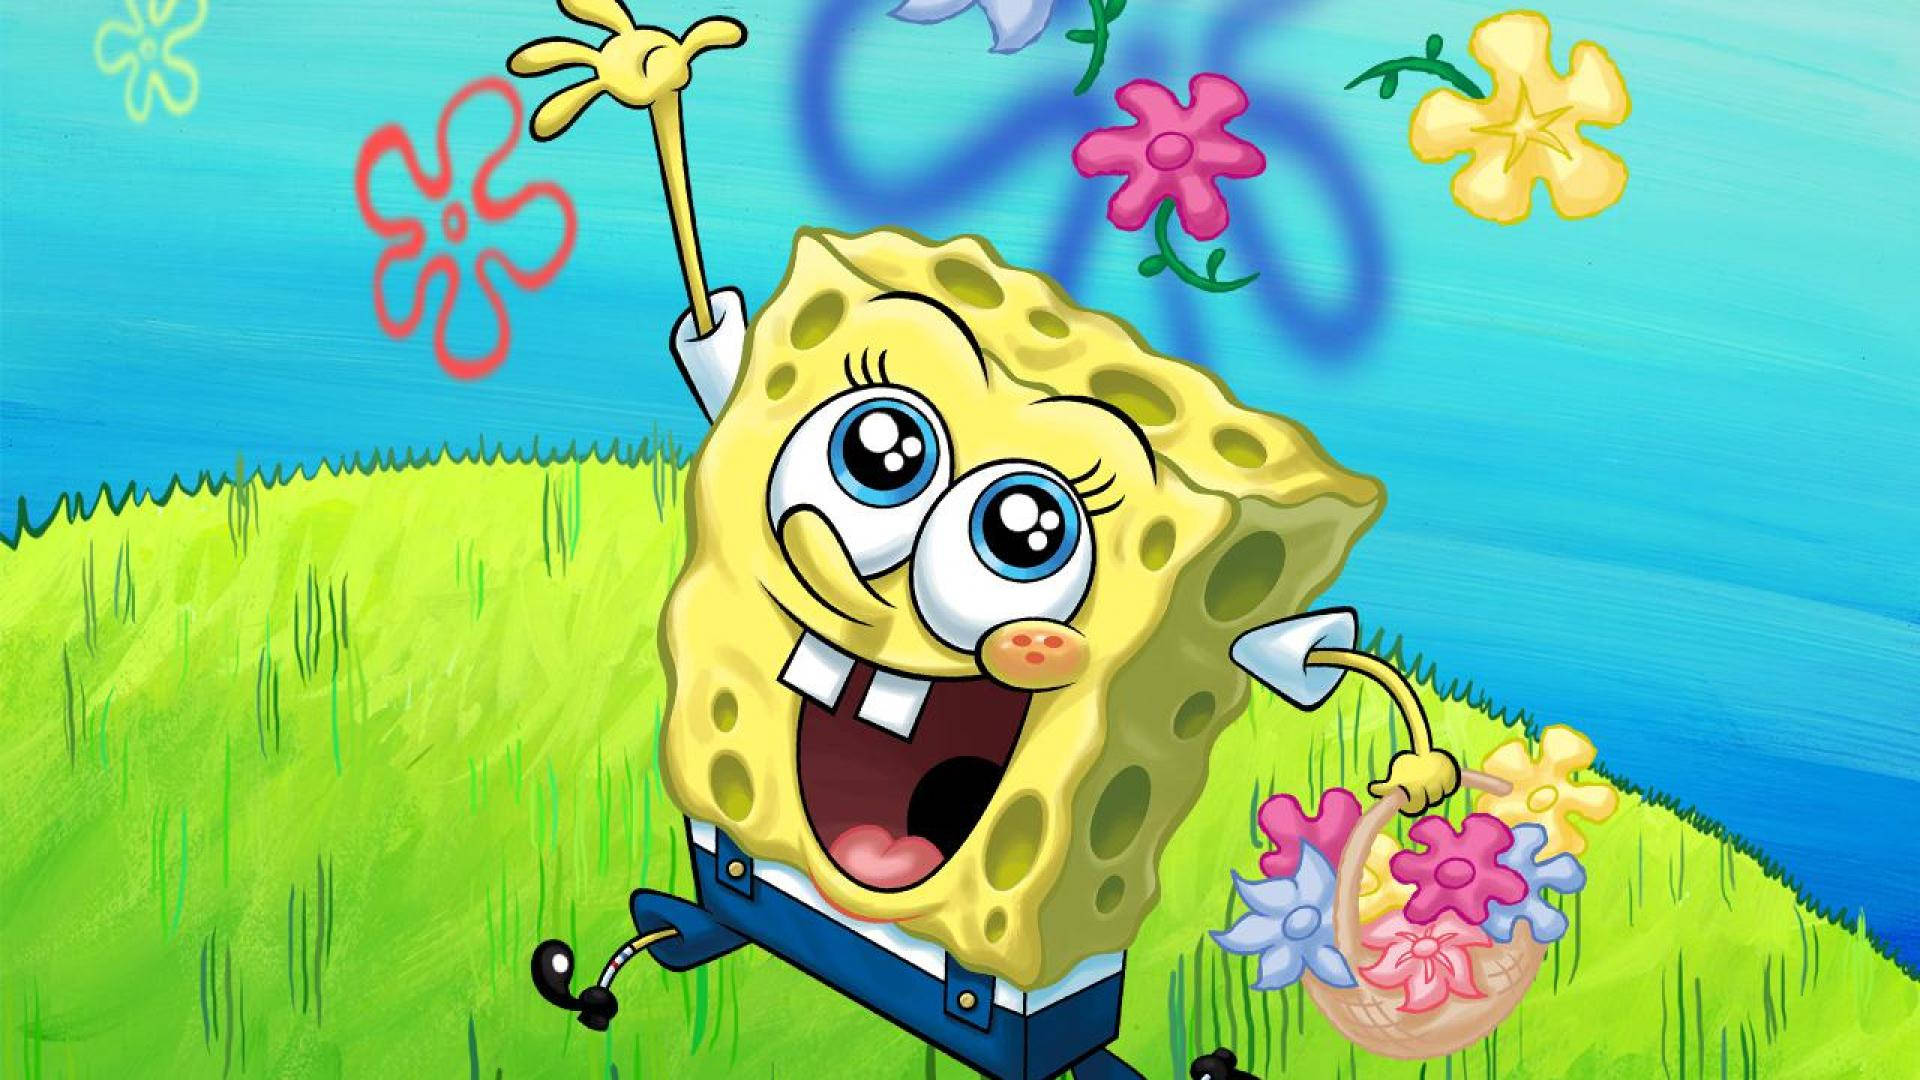 Happy Face Of Spongebob Background